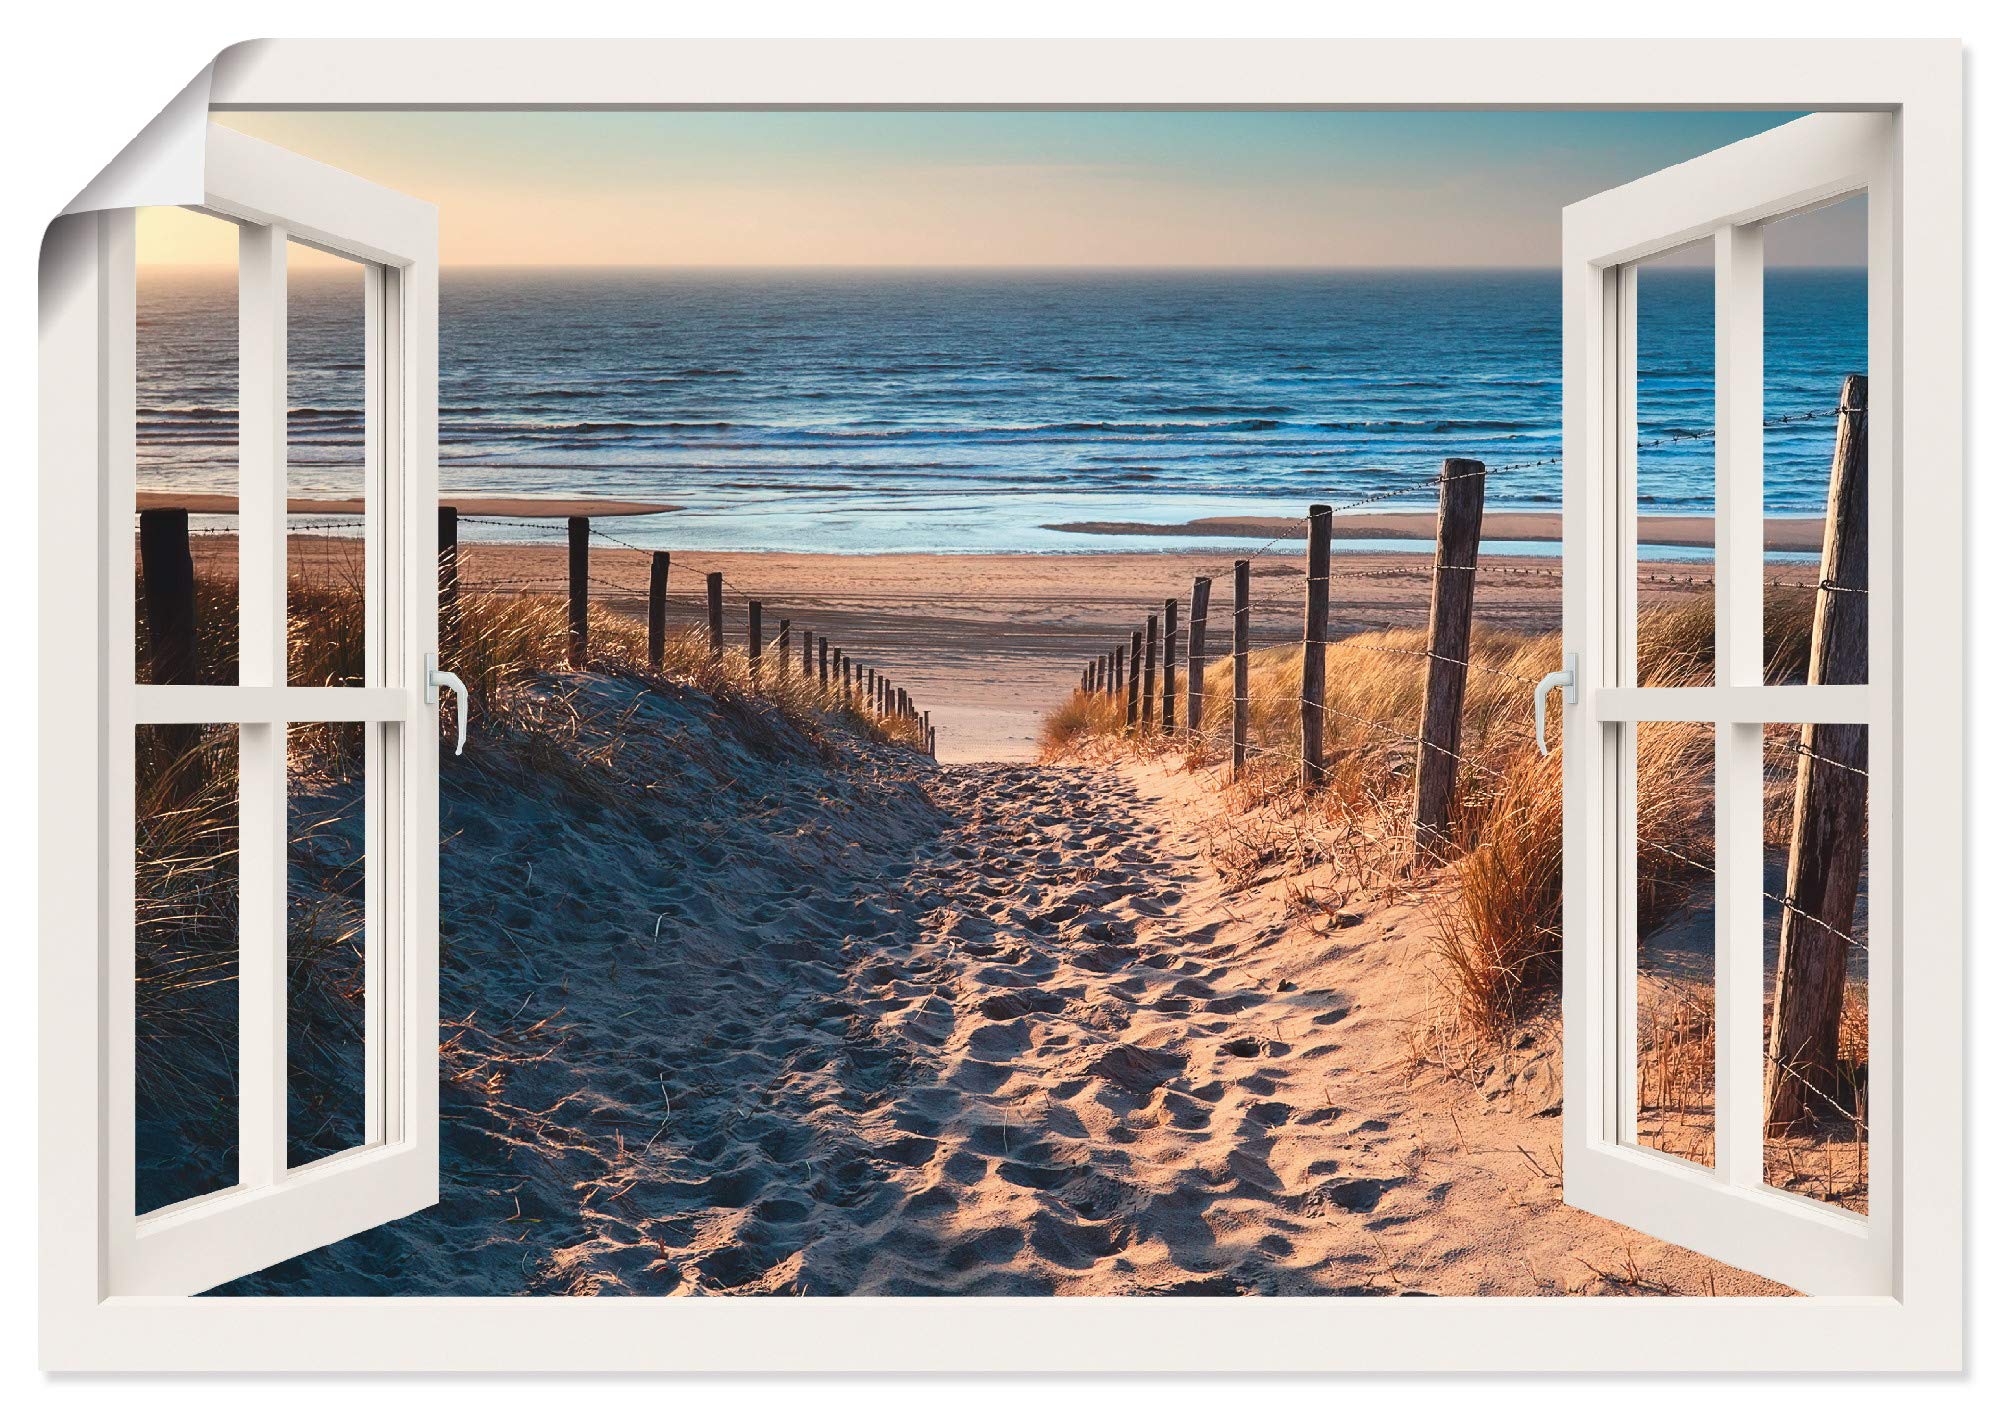 ARTland Poster Kunstdruck Wandposter Bild ohne Rahmen 70x50 cm Fensterblick Fenster Strand Düne Meer Maritim Landschaft Küste Natur T6BV